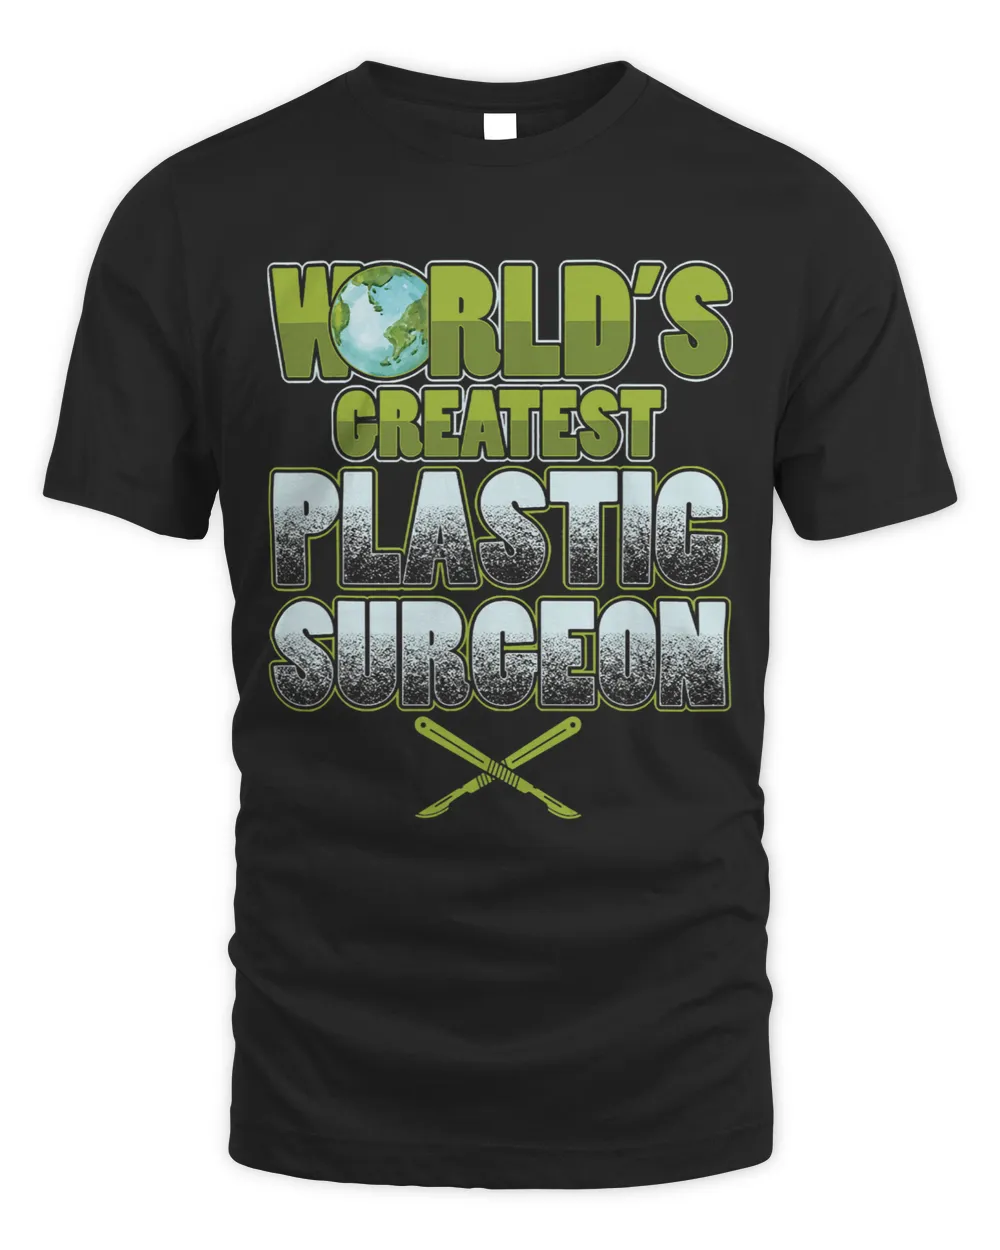 The worlds largest plastic surgeon